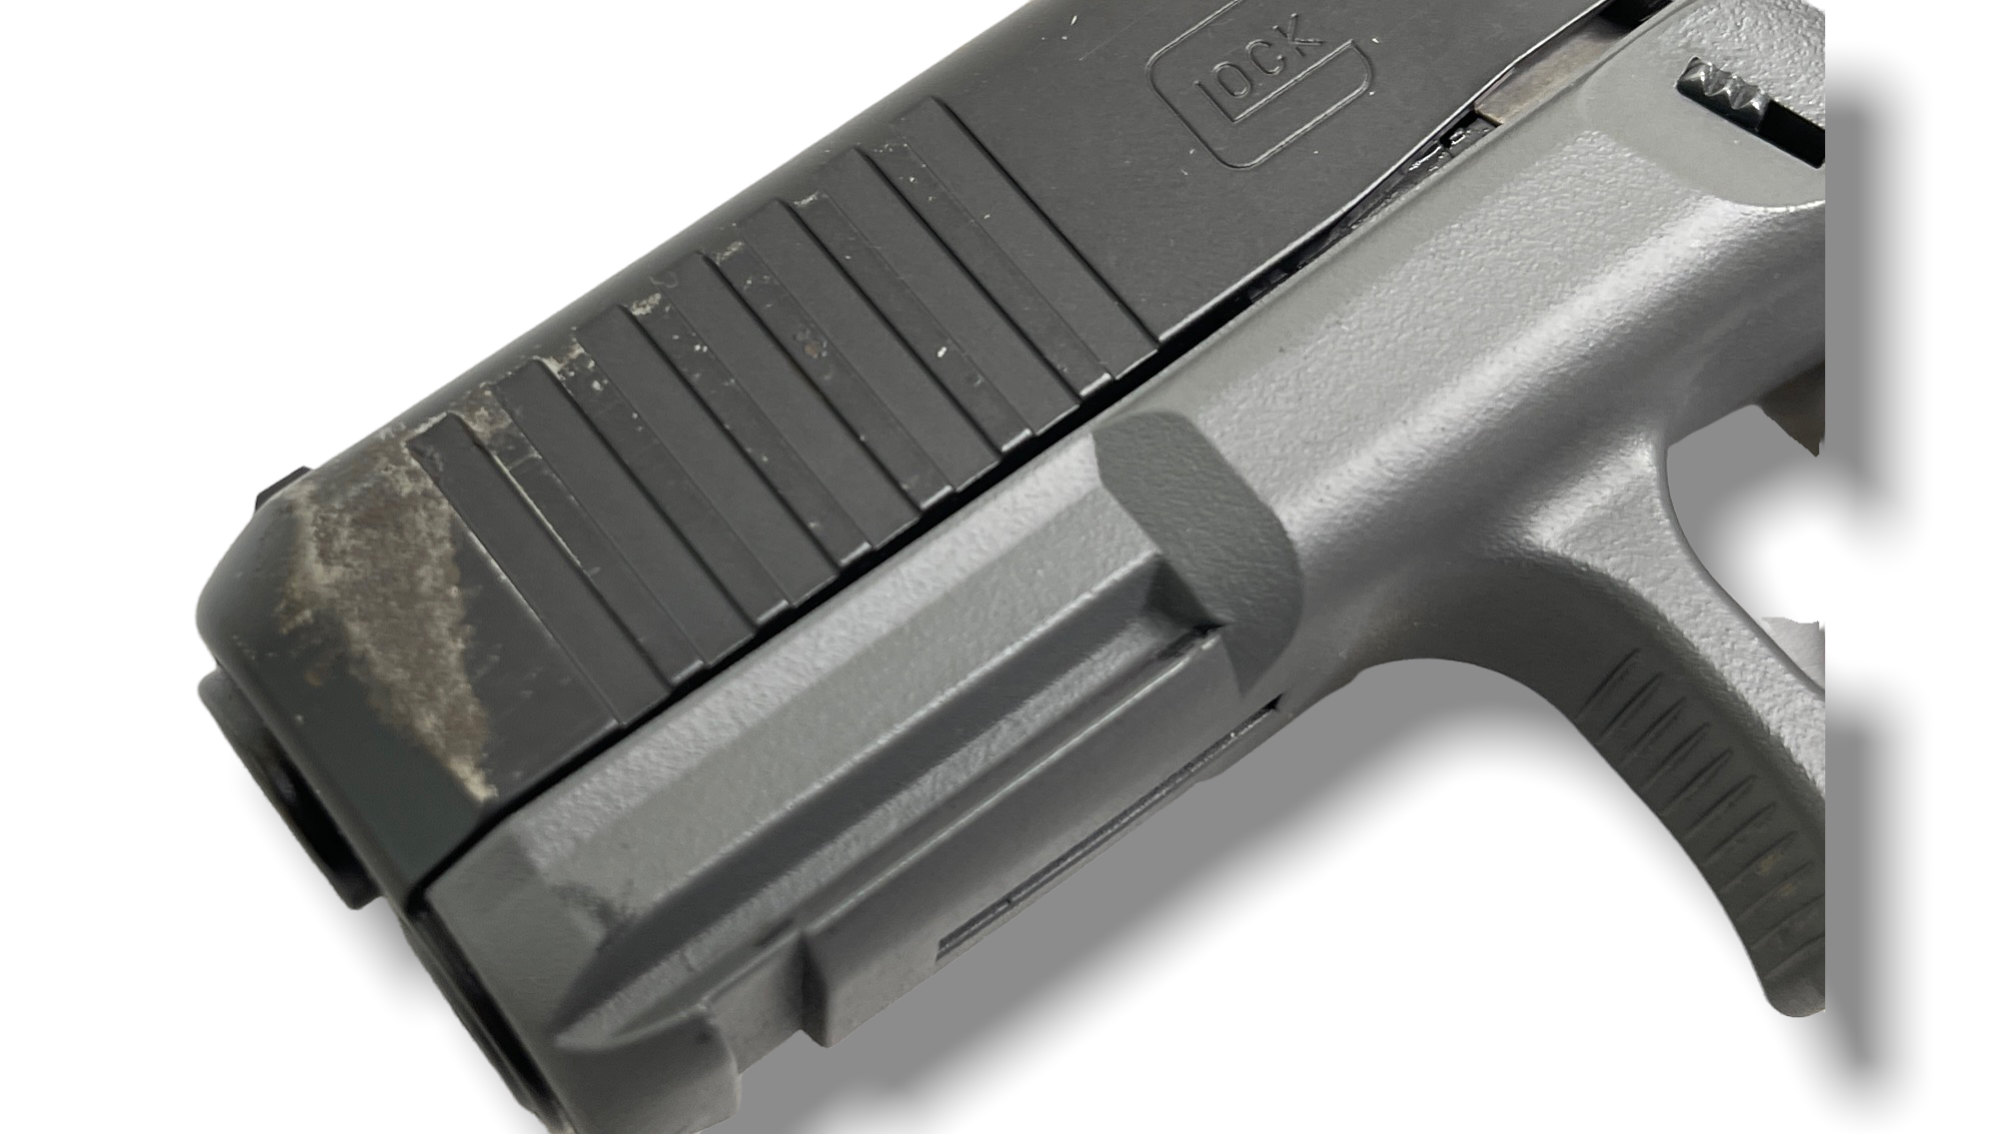 Glock 19 Gen 5 M.O.S. Semi-Automatic Pistol 9mm Luger 4.02 Barrel